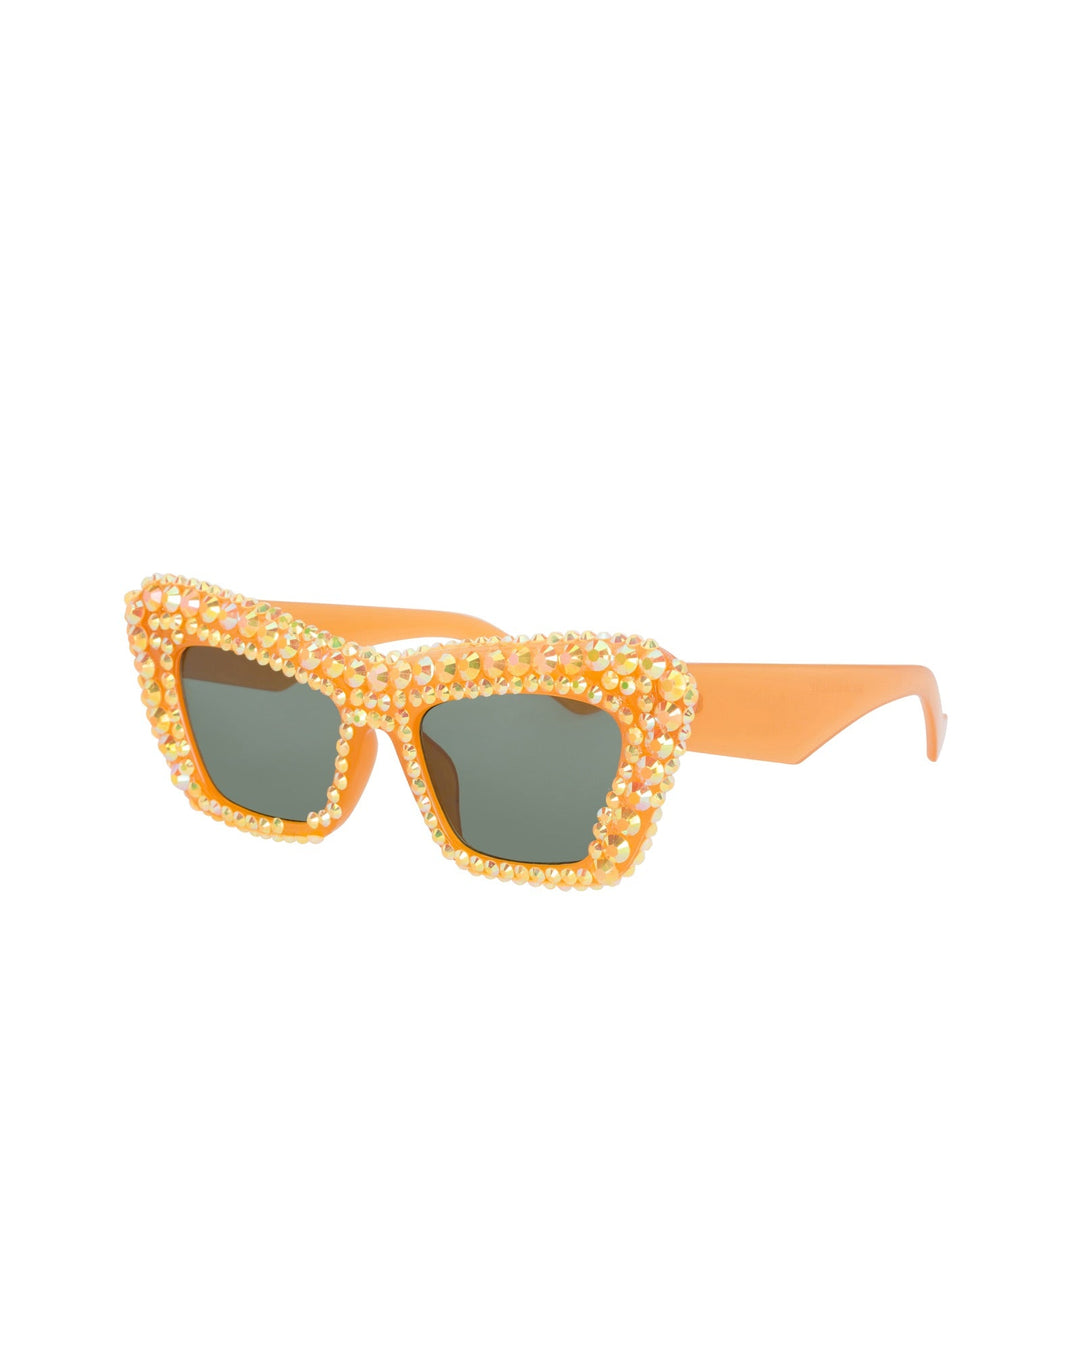 Hipster Rhinestone Cat Eye Sunglasses - Golden Amber by Meghan Fabulous